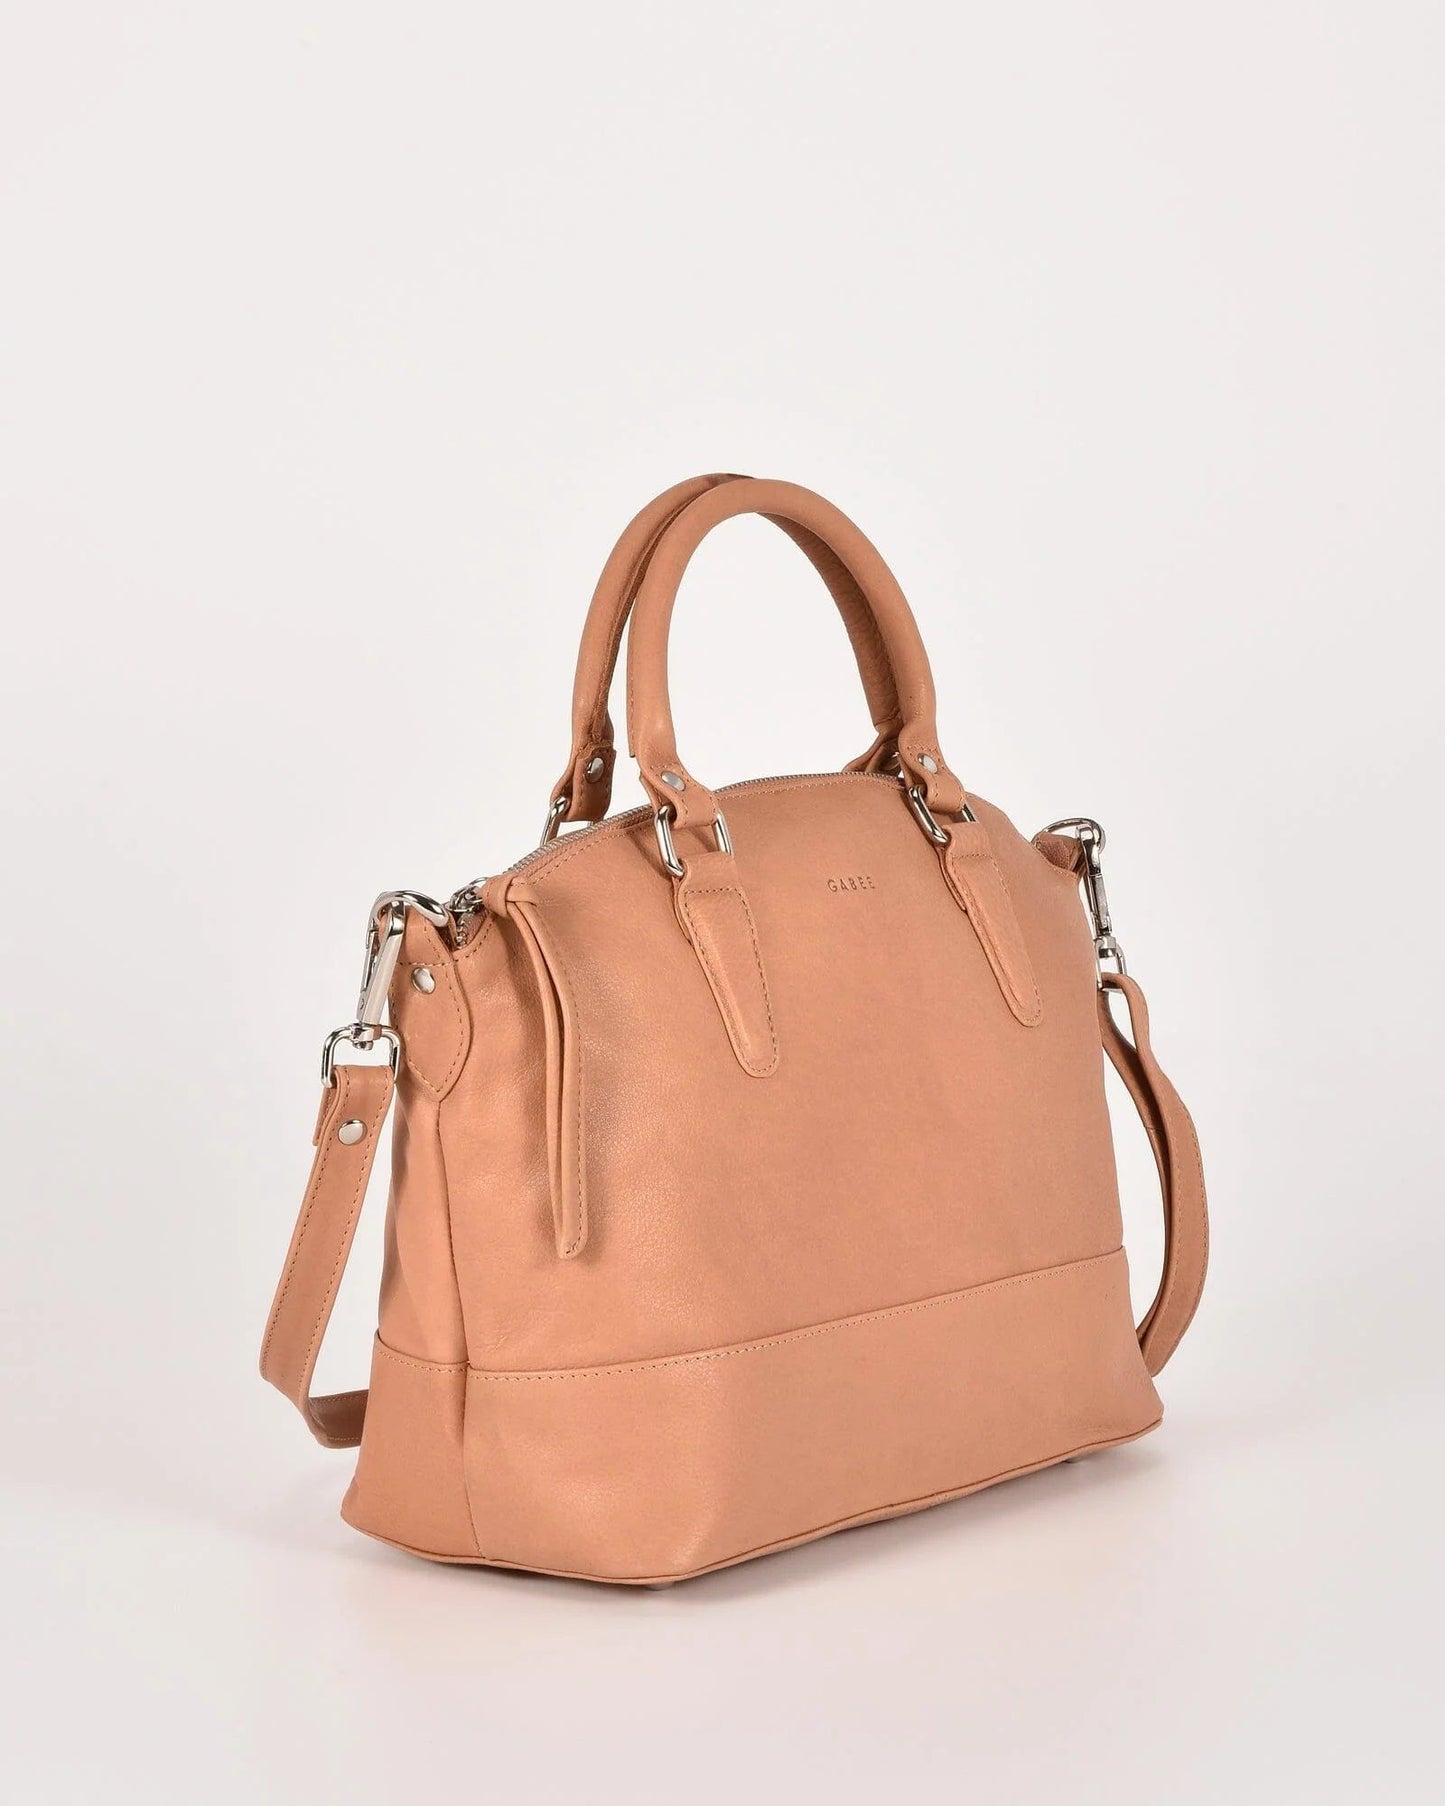 GABEE-Adriana Soft Leather Handbag - rainbowbags